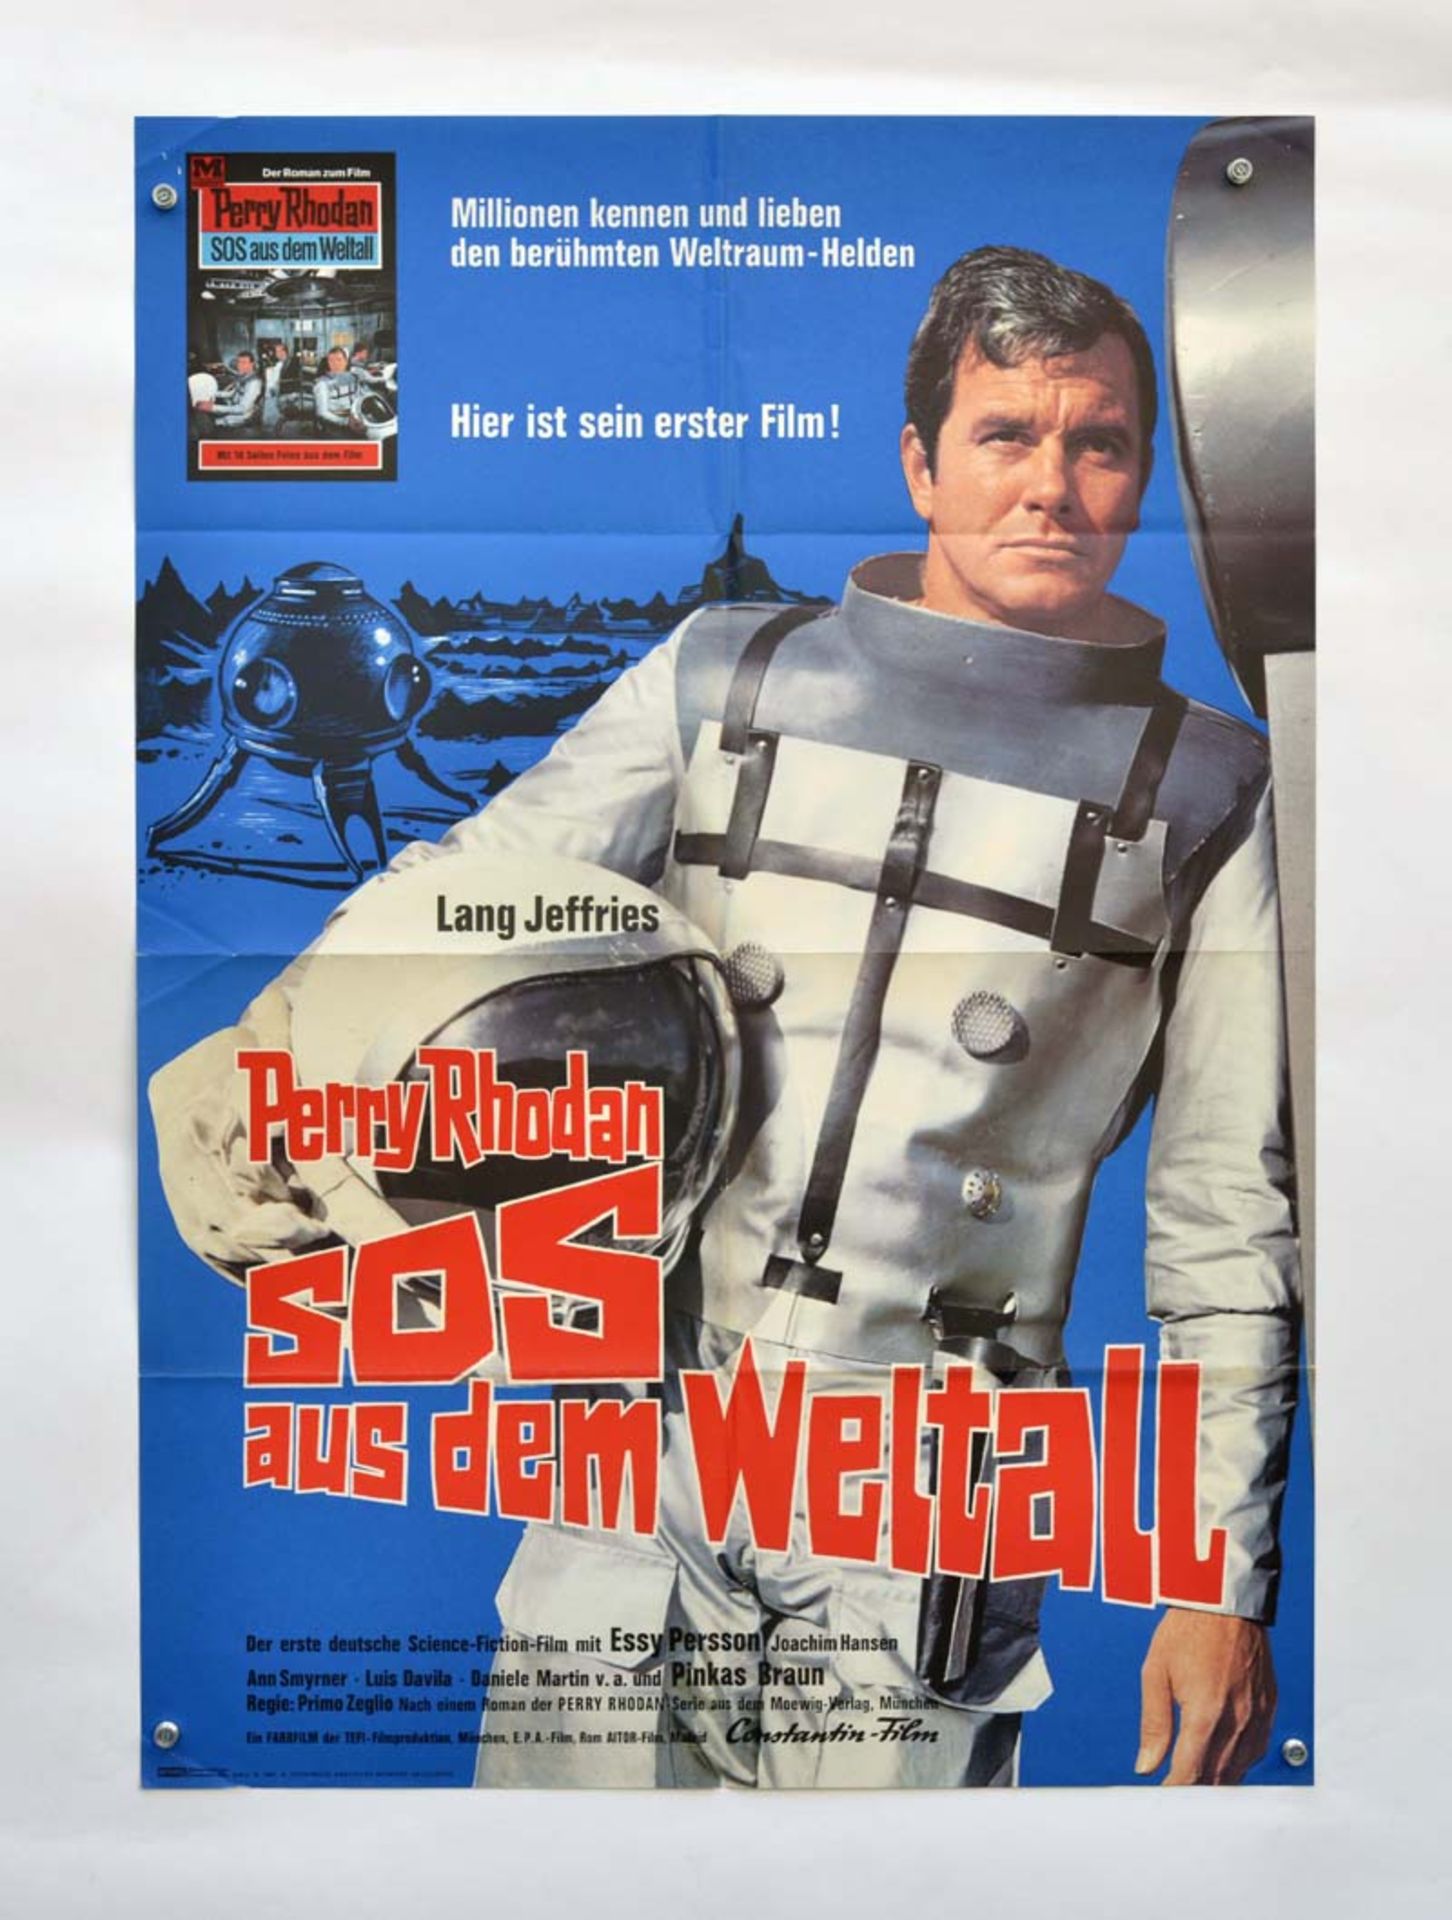 Filmplakat "Perry Rhodan SOS aus dem Weltall", 59x84 cm, Knickfalten, 4 Nadellöcher, sonst guter